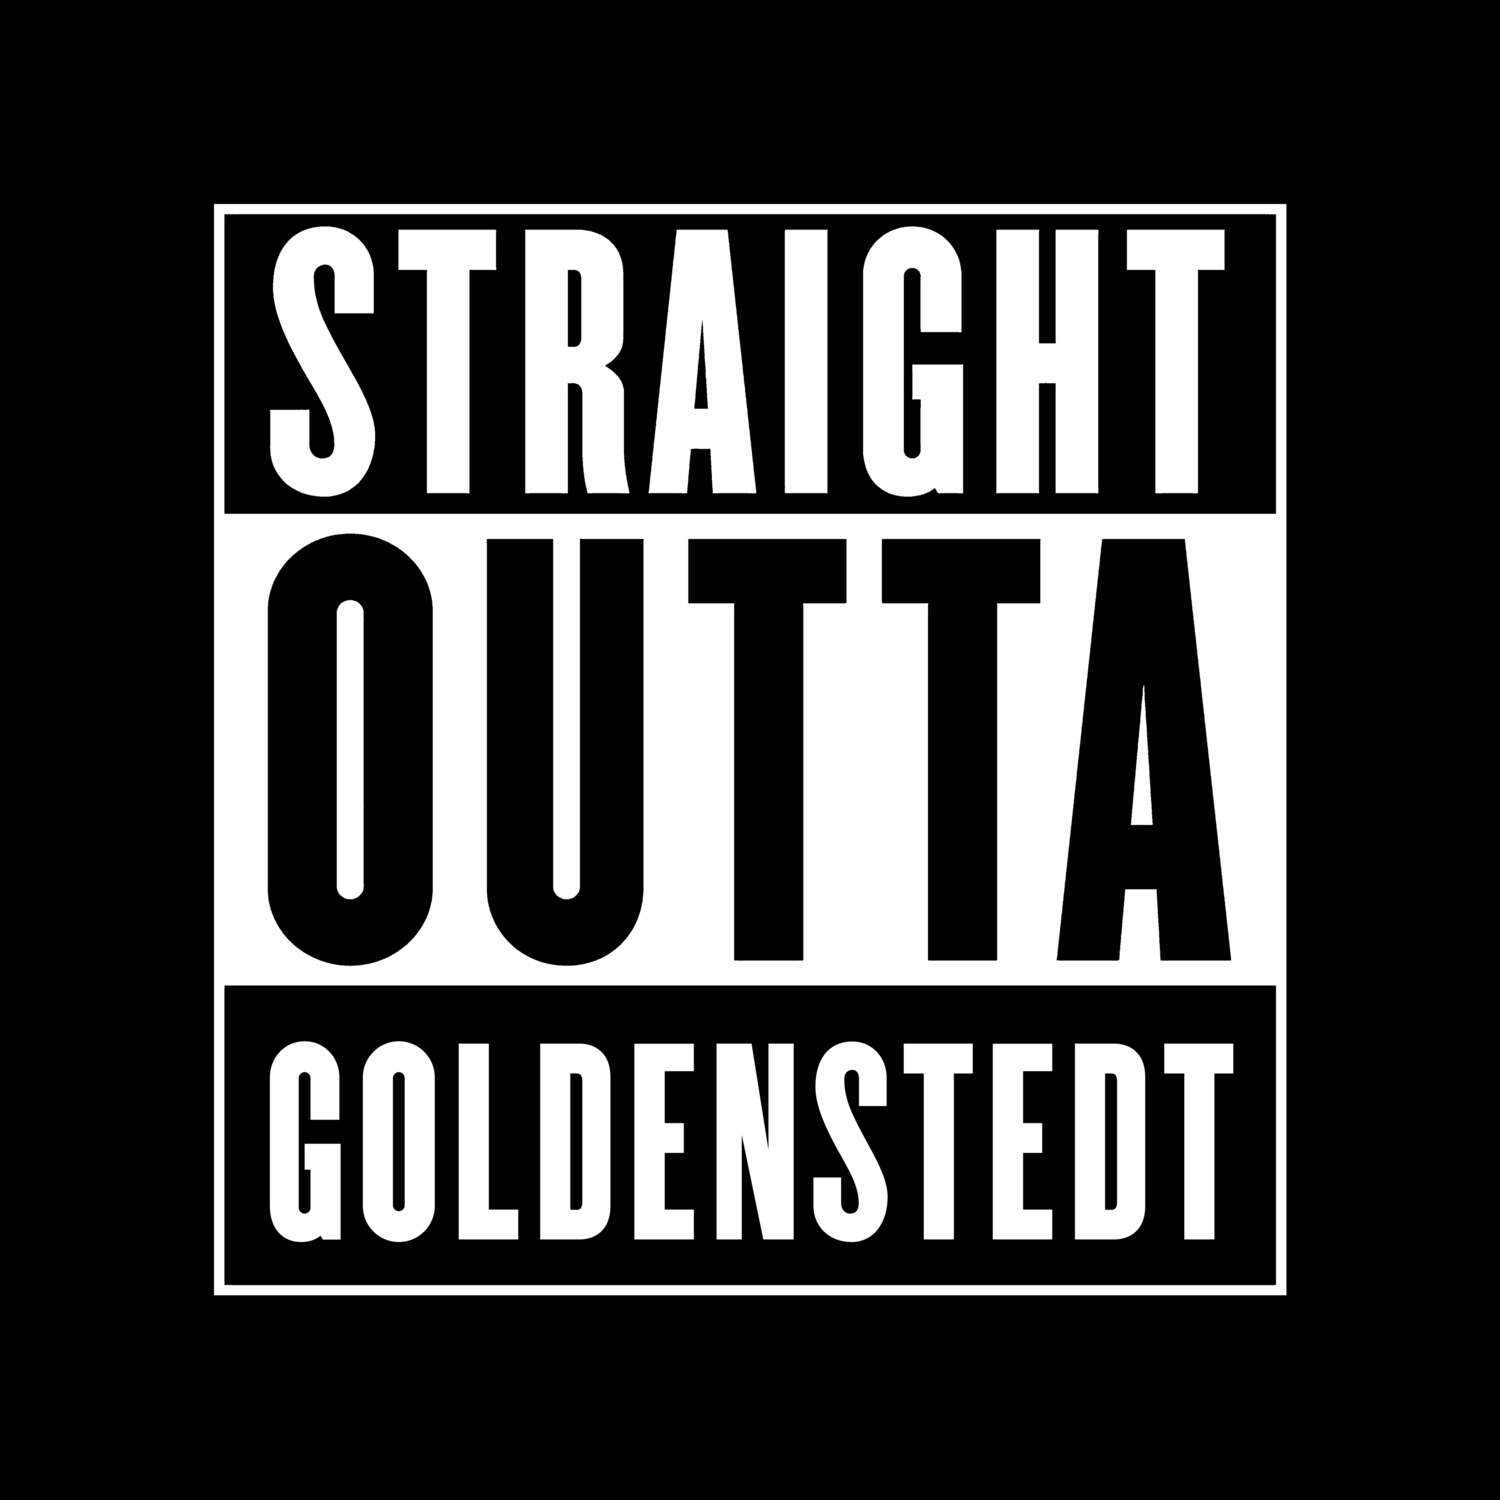 Goldenstedt T-Shirt »Straight Outta«